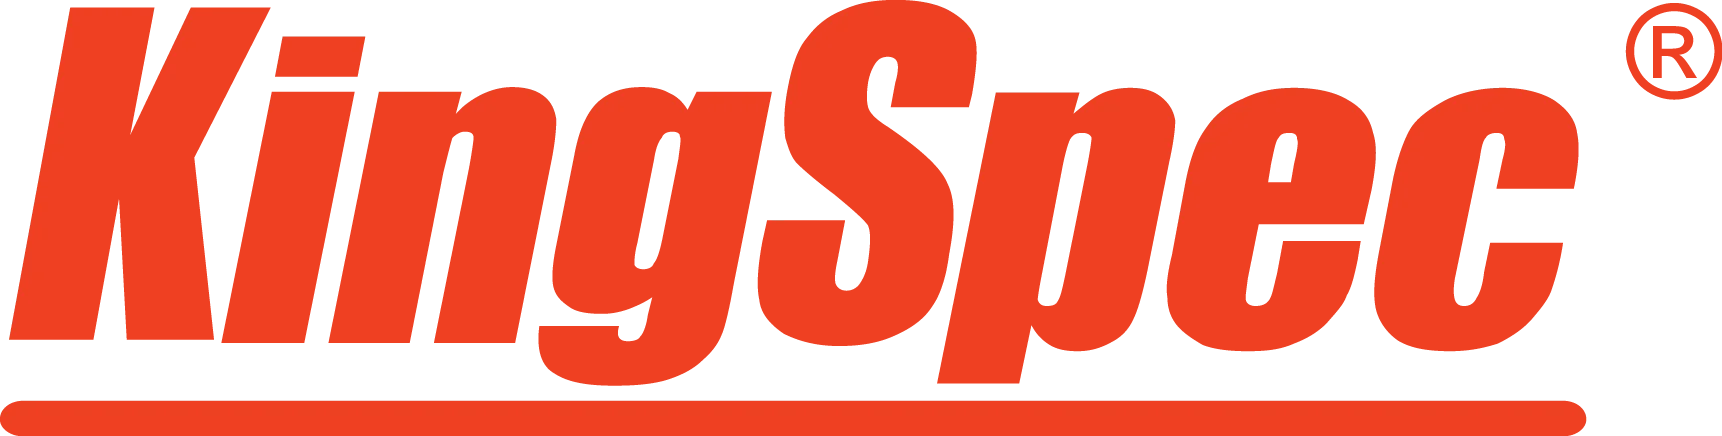 Кингспек. KINGSPEC логотип. KINGSPEC SSD 120gb. KINGSPEC логотип неподрезанный. KINGSPEC p3-128 rm1135.